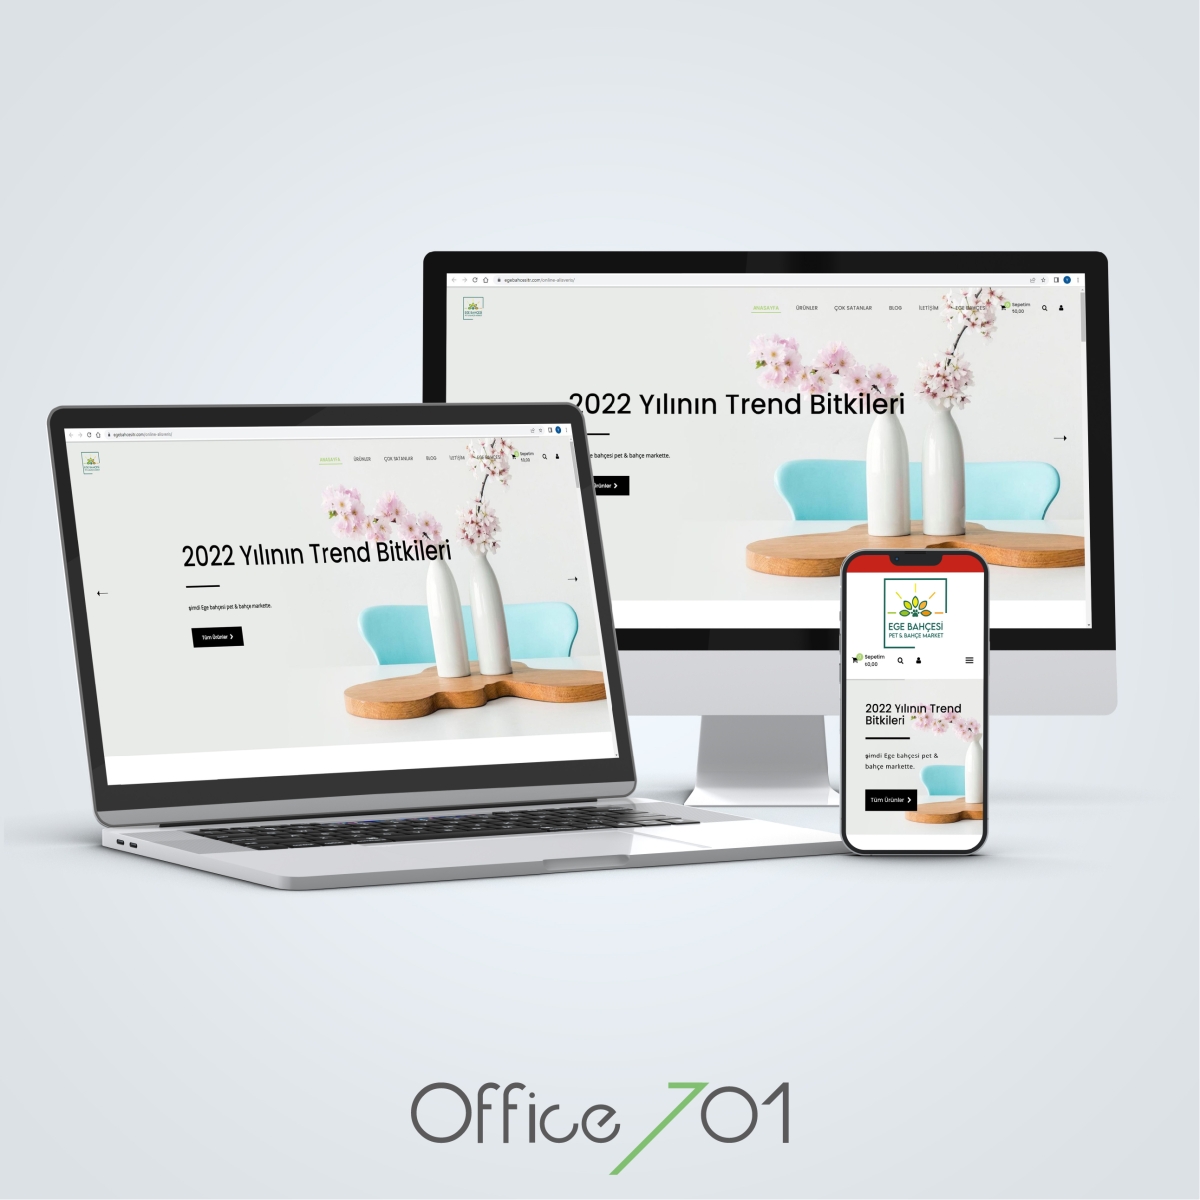 Office701 | Ege Bahçesi | Pet & Garden E-Commerce Website Design